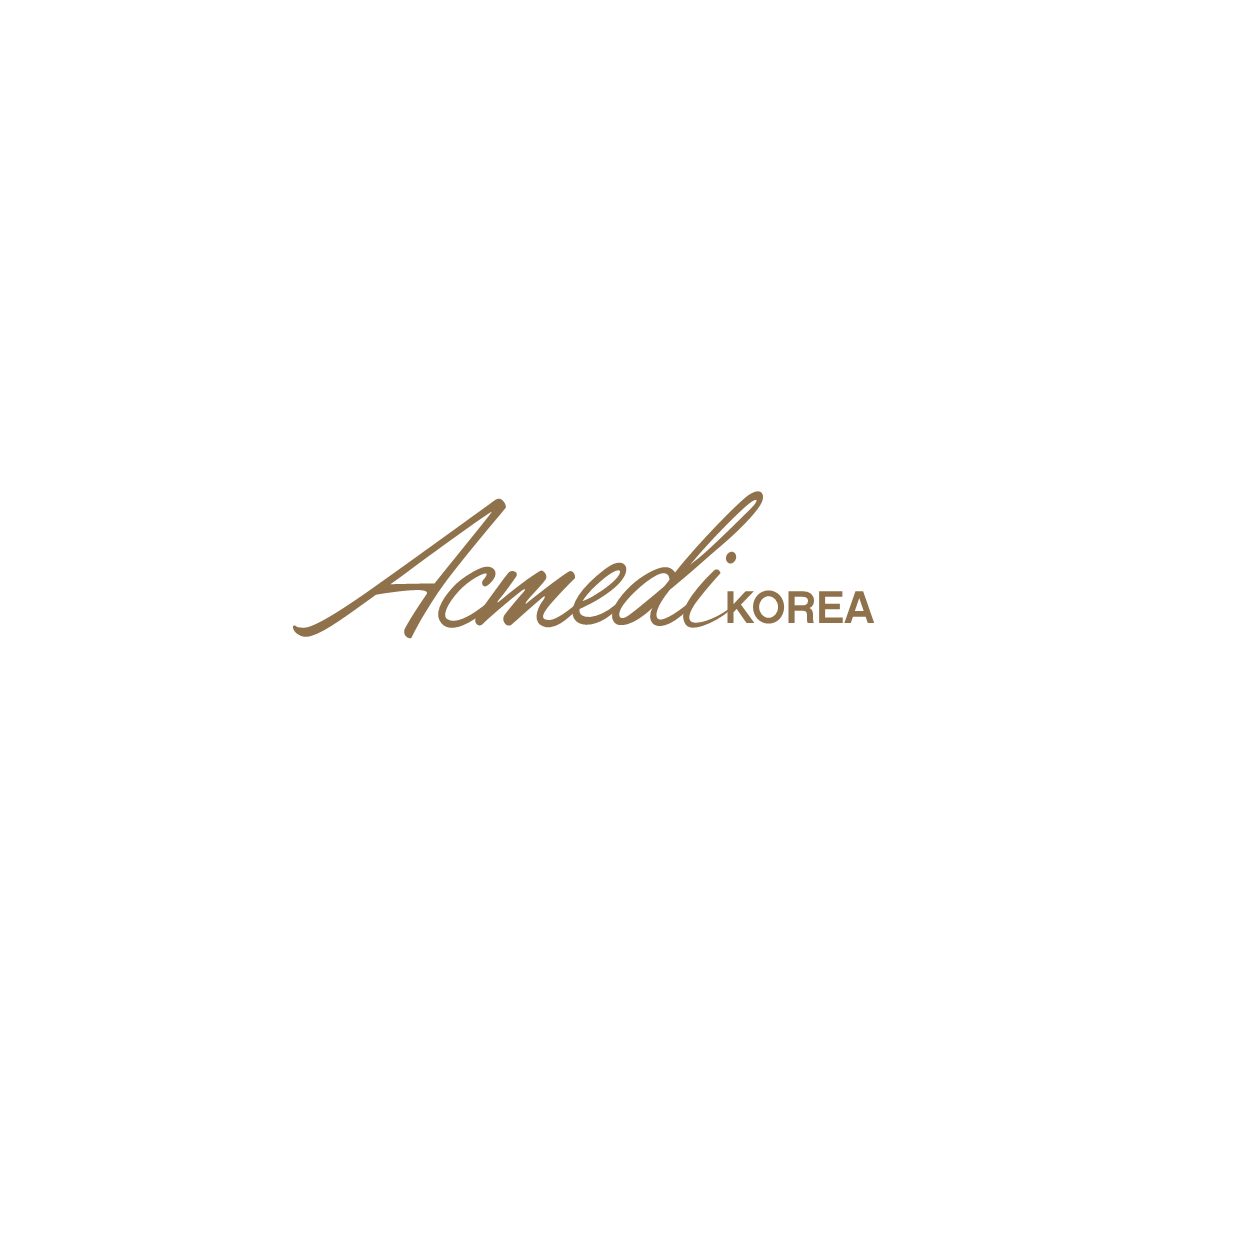 ACMEDI KOREA CO., LTD